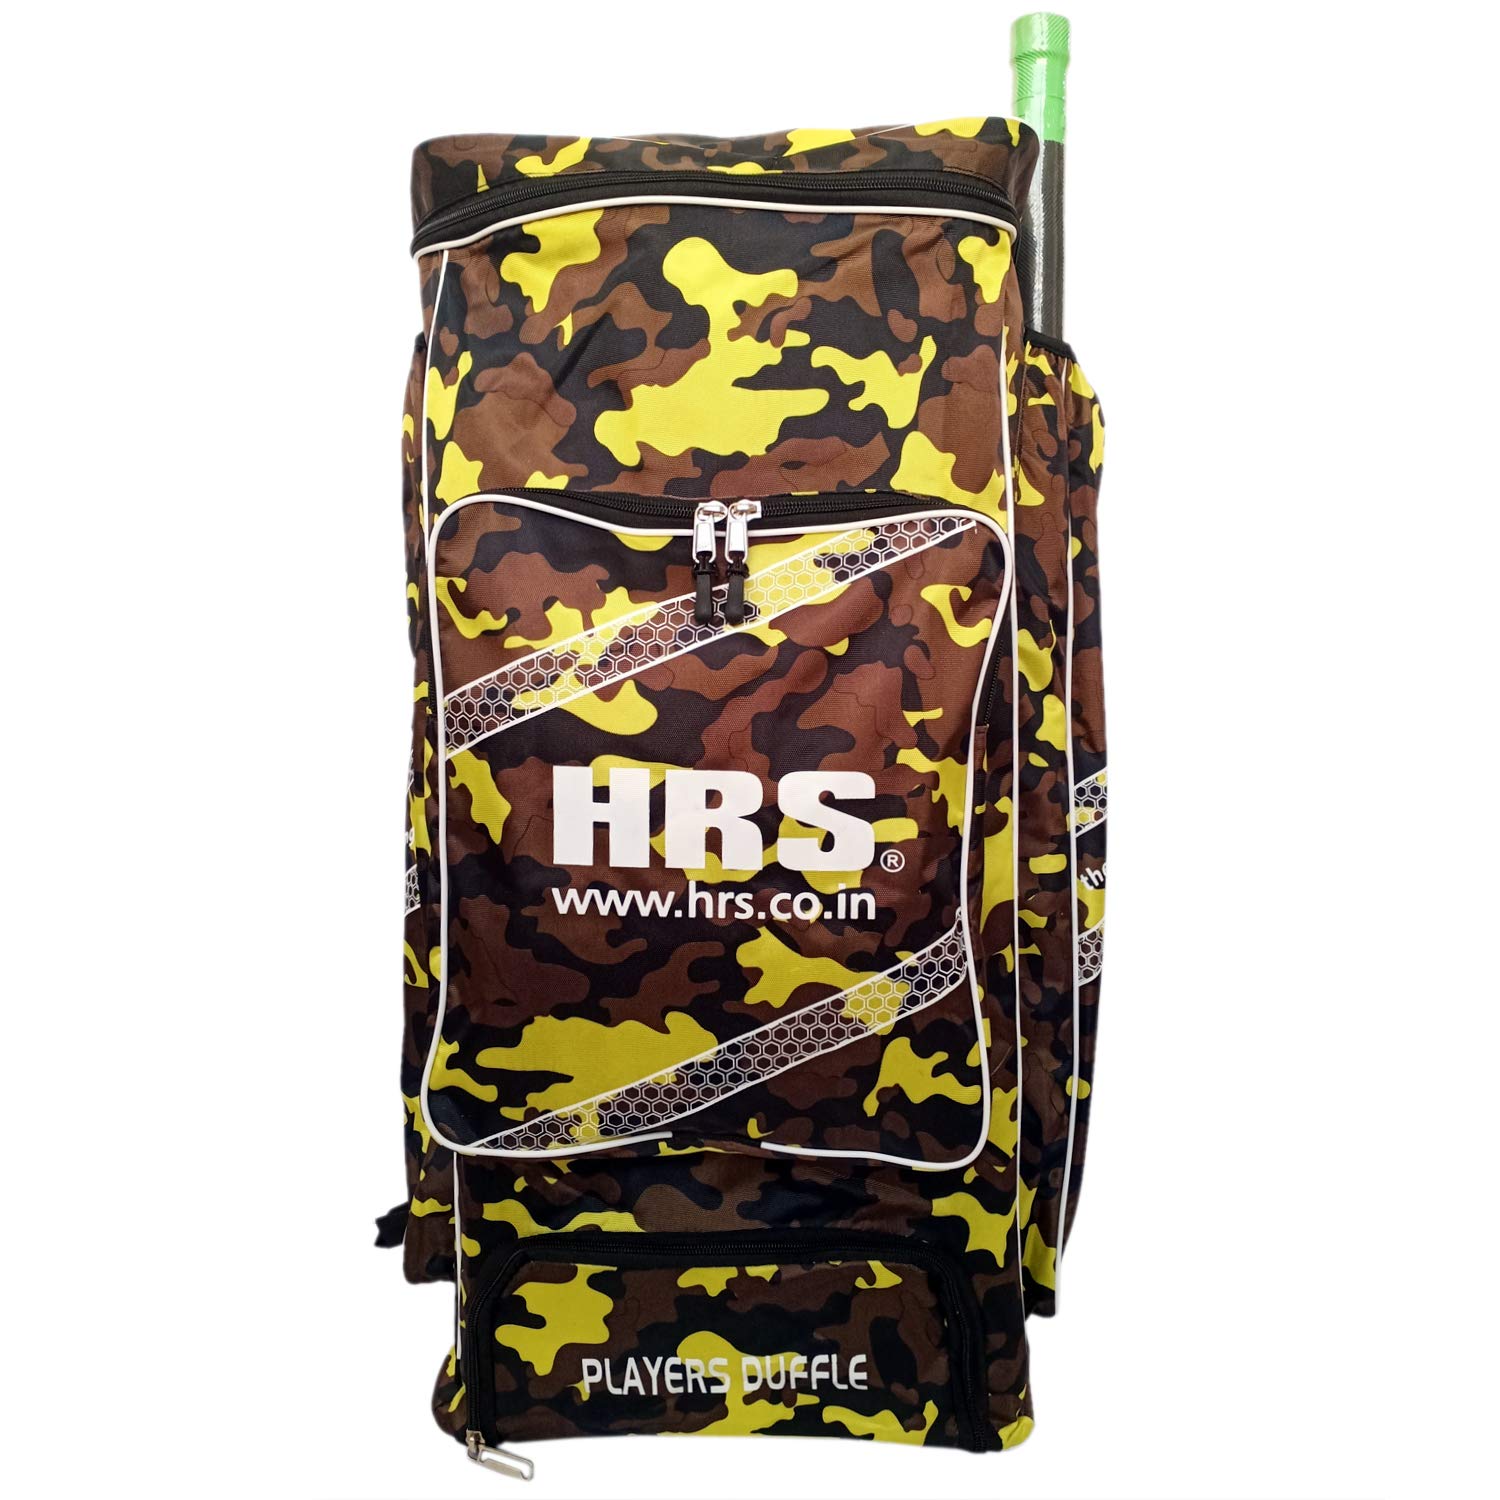 HRS Players Duffle Cricket Kit Bag - Camo/Yellow - Best Price online Prokicksports.com